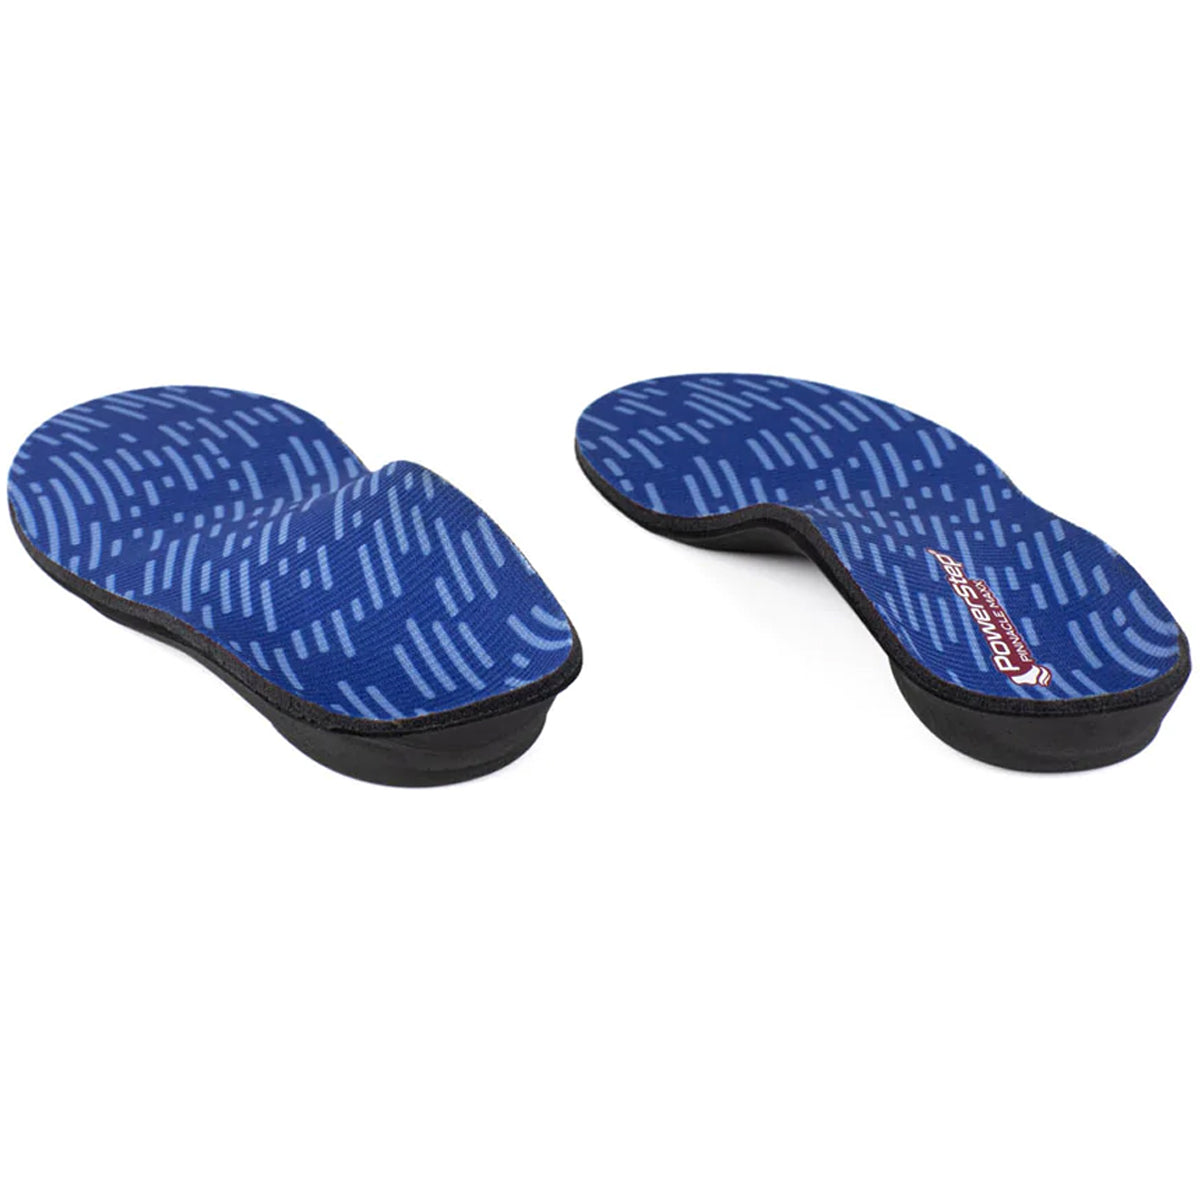 Powerstep Pinnacle Maxx Full Length Orthotic Shoe Insoles Powerstep